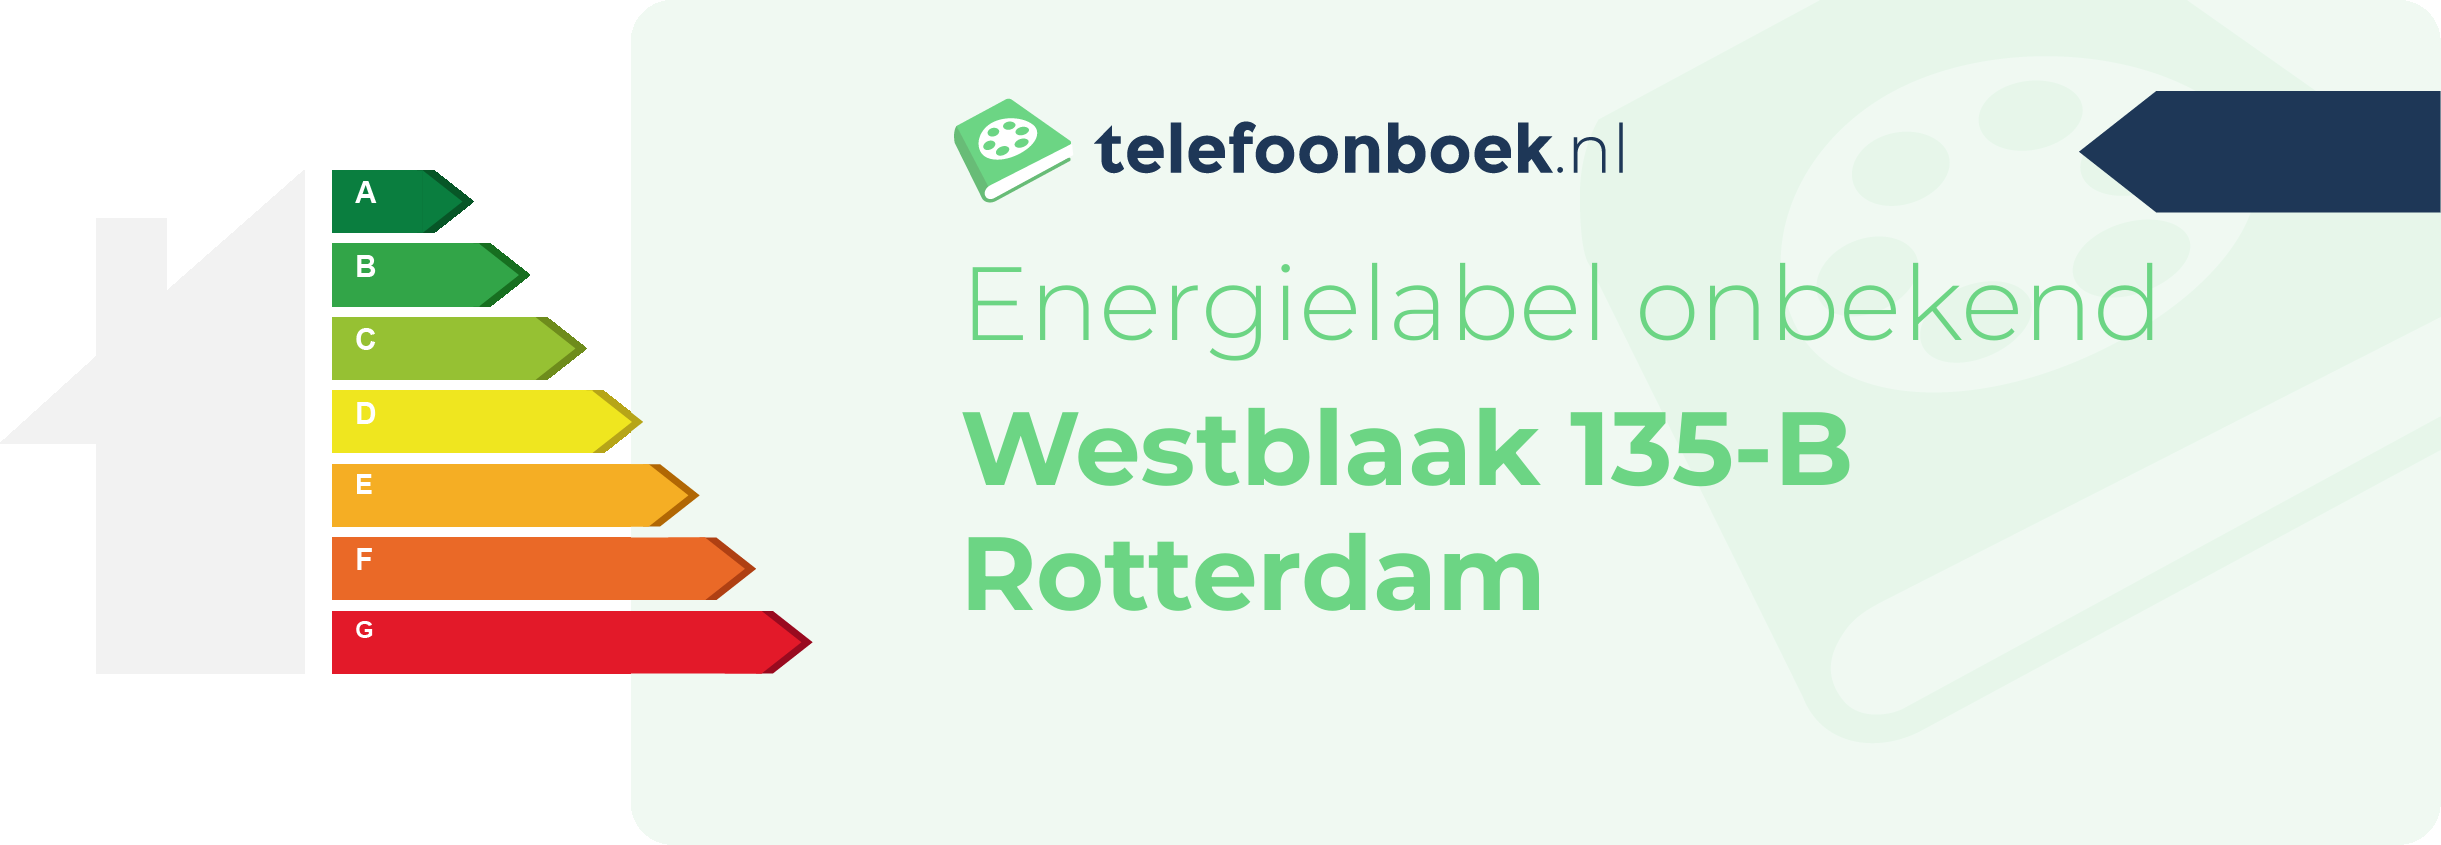 Energielabel Westblaak 135-B Rotterdam